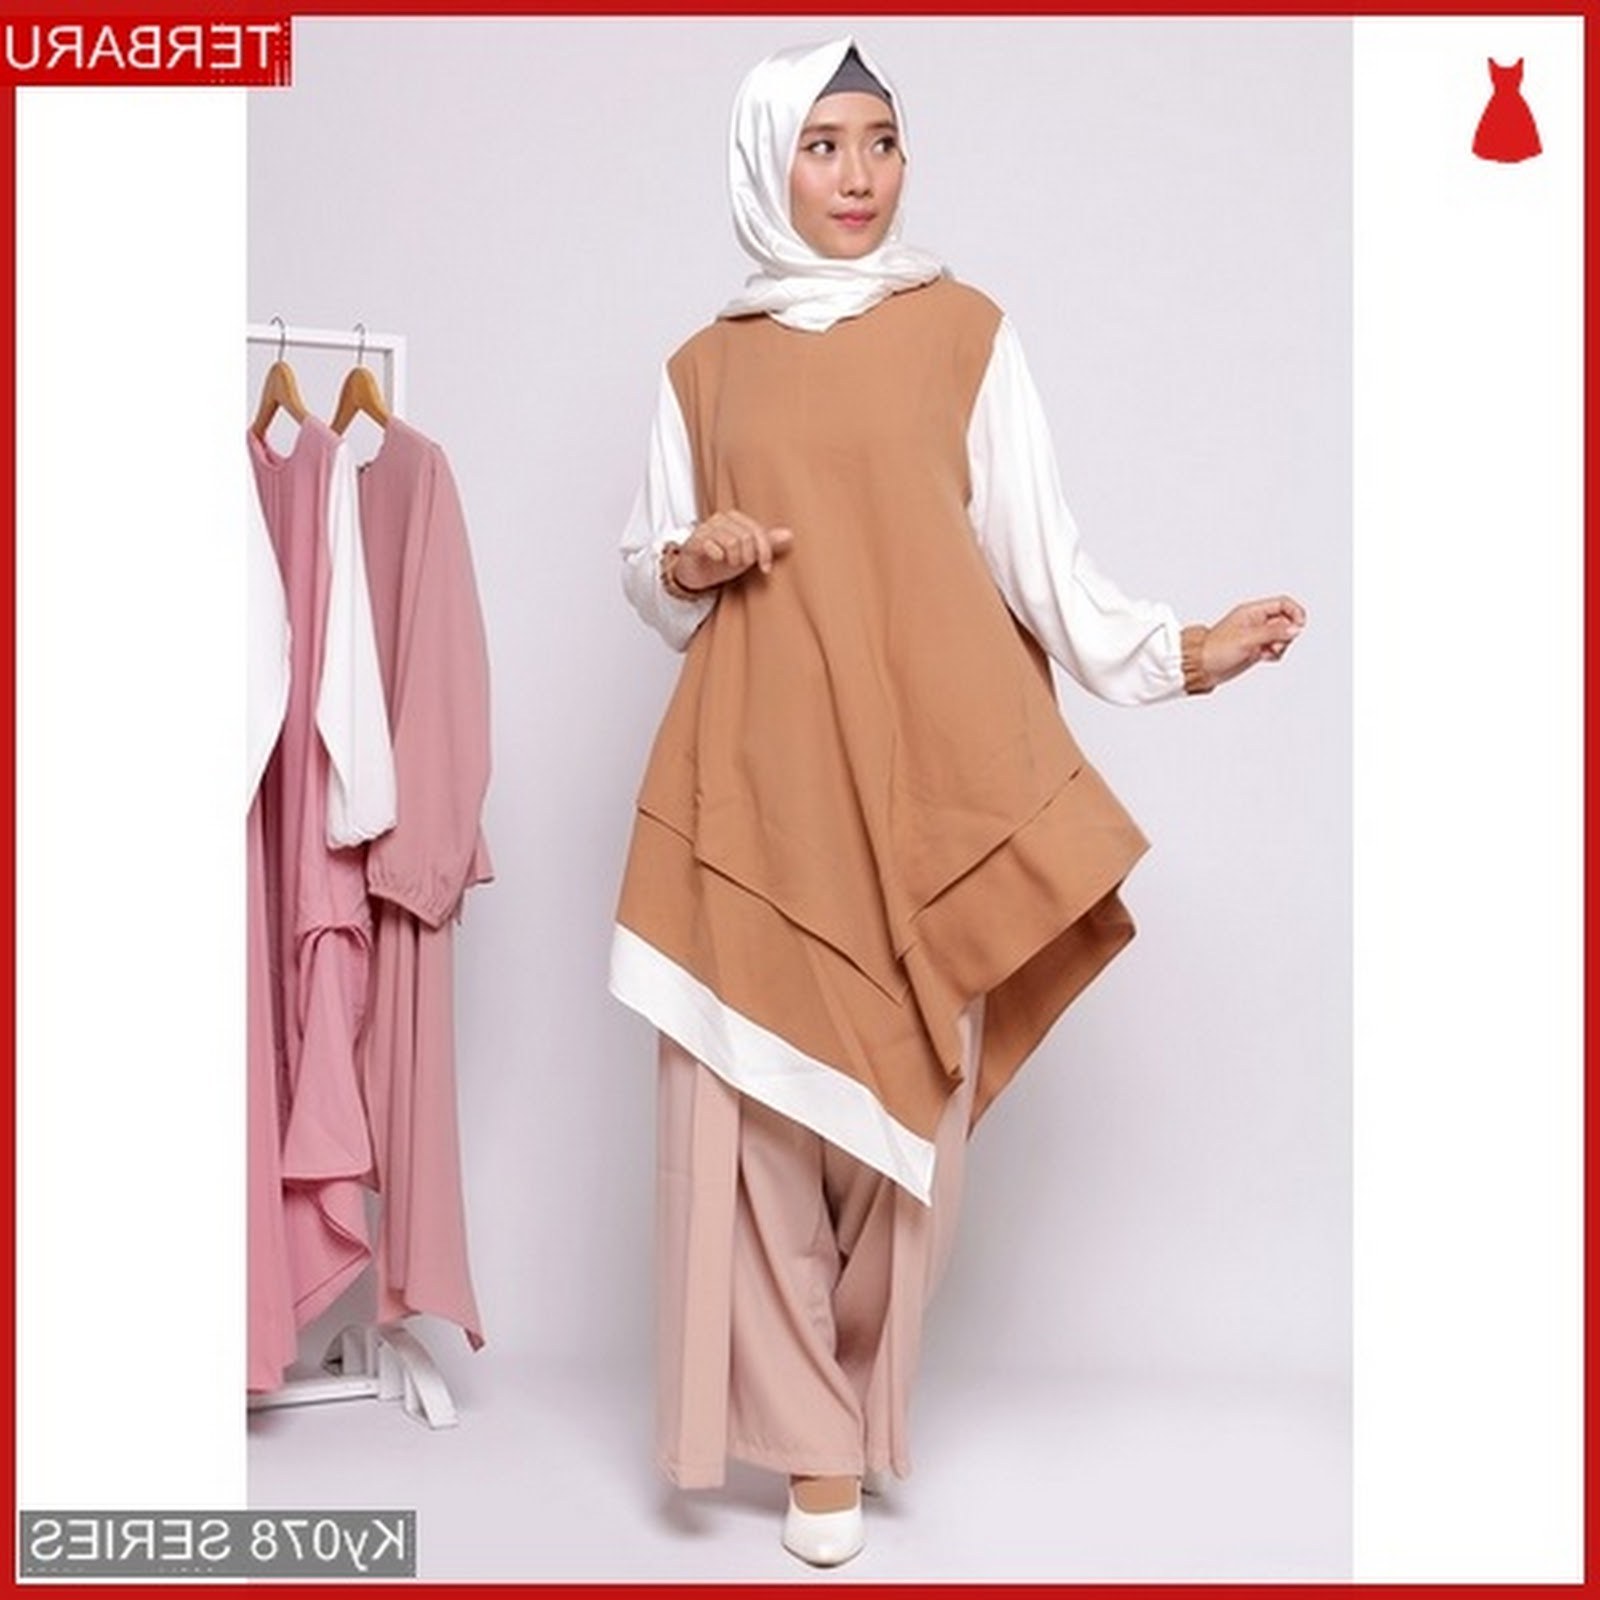 Model Motif Baju Lebaran J7do Dapatkan Baju Muslim Lebaran Paling Keren Terbaru Di Bmg